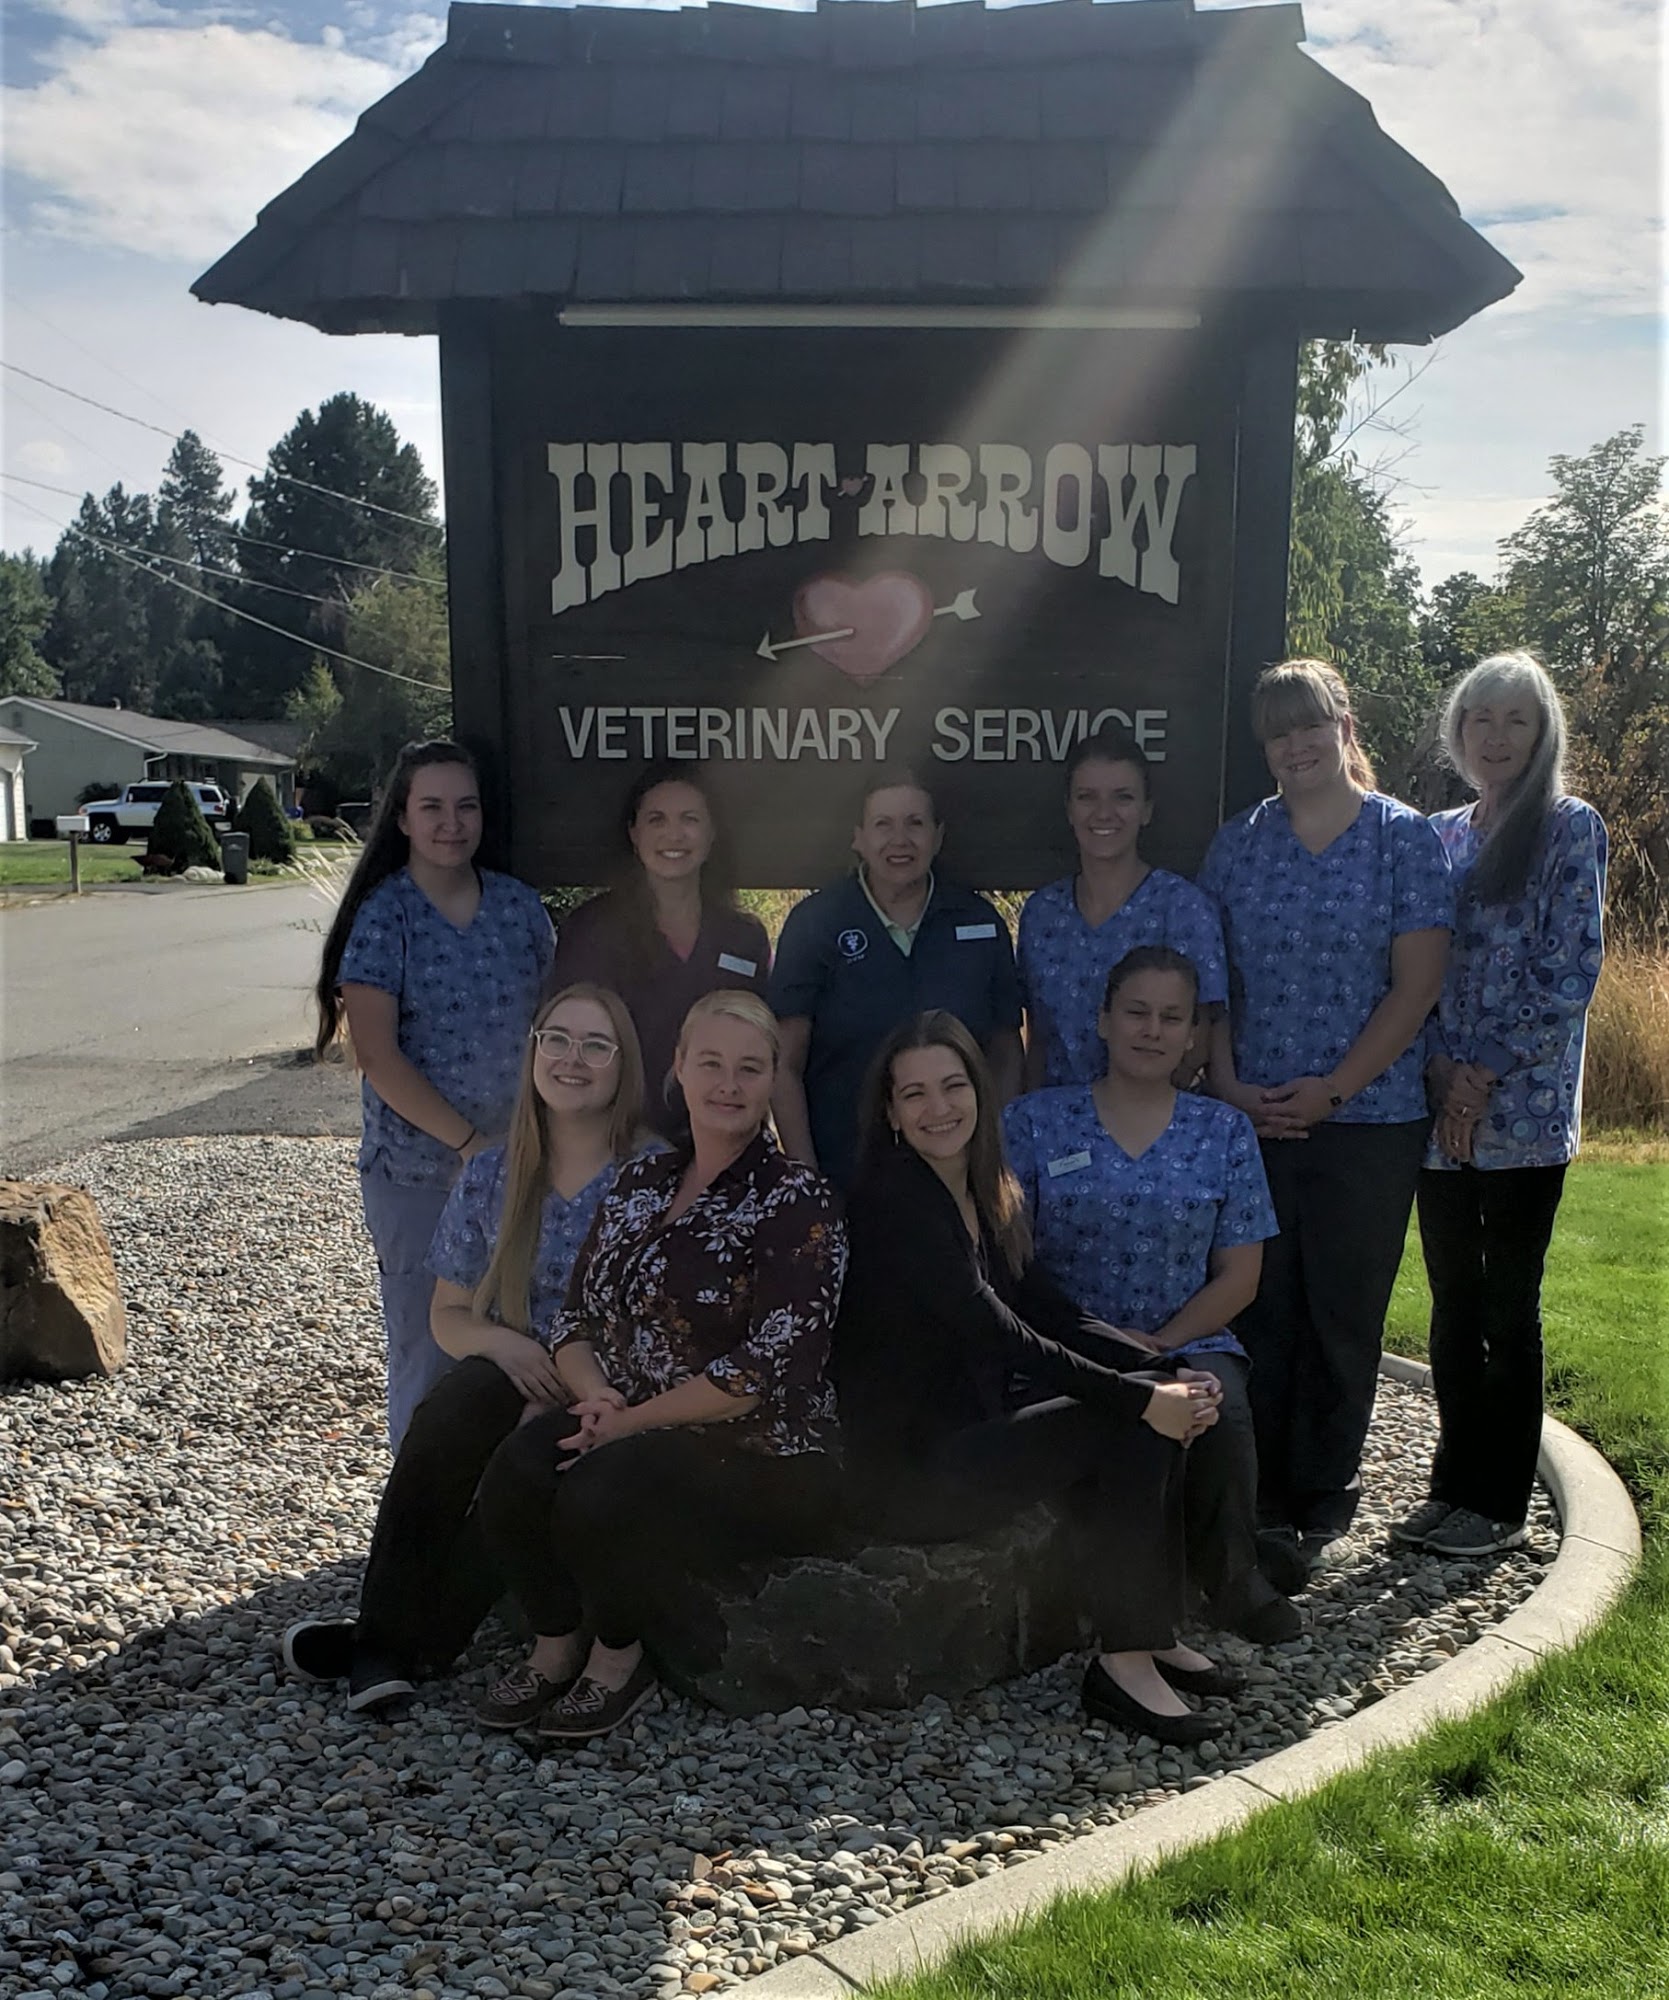 Heart Arrow Veterinary Service LLC